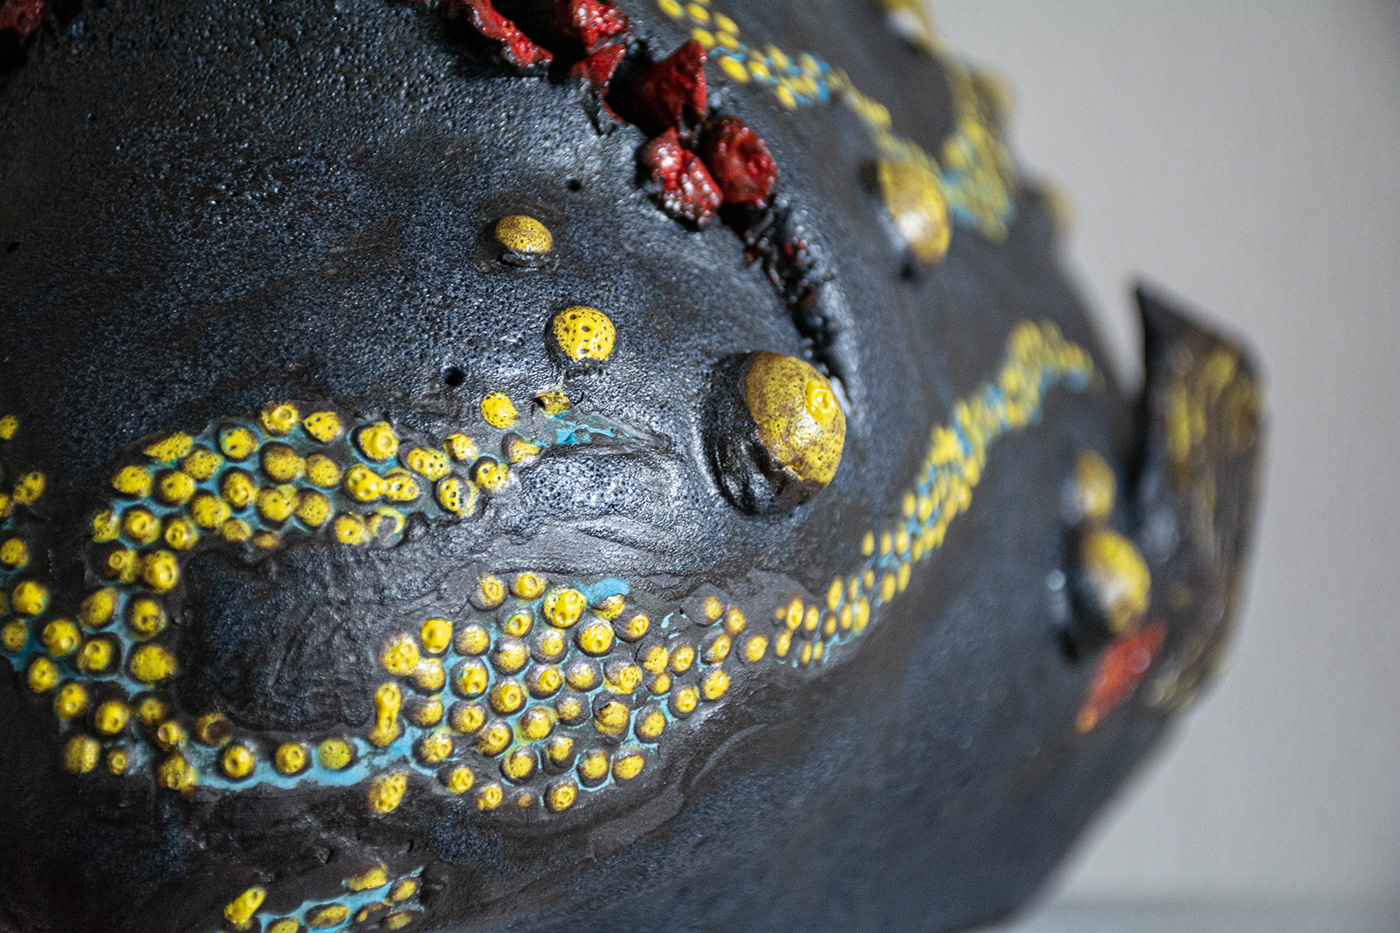 art ceramic contemporary art deepsee fish handmade olivia weiss Pottery sculpture stoneware